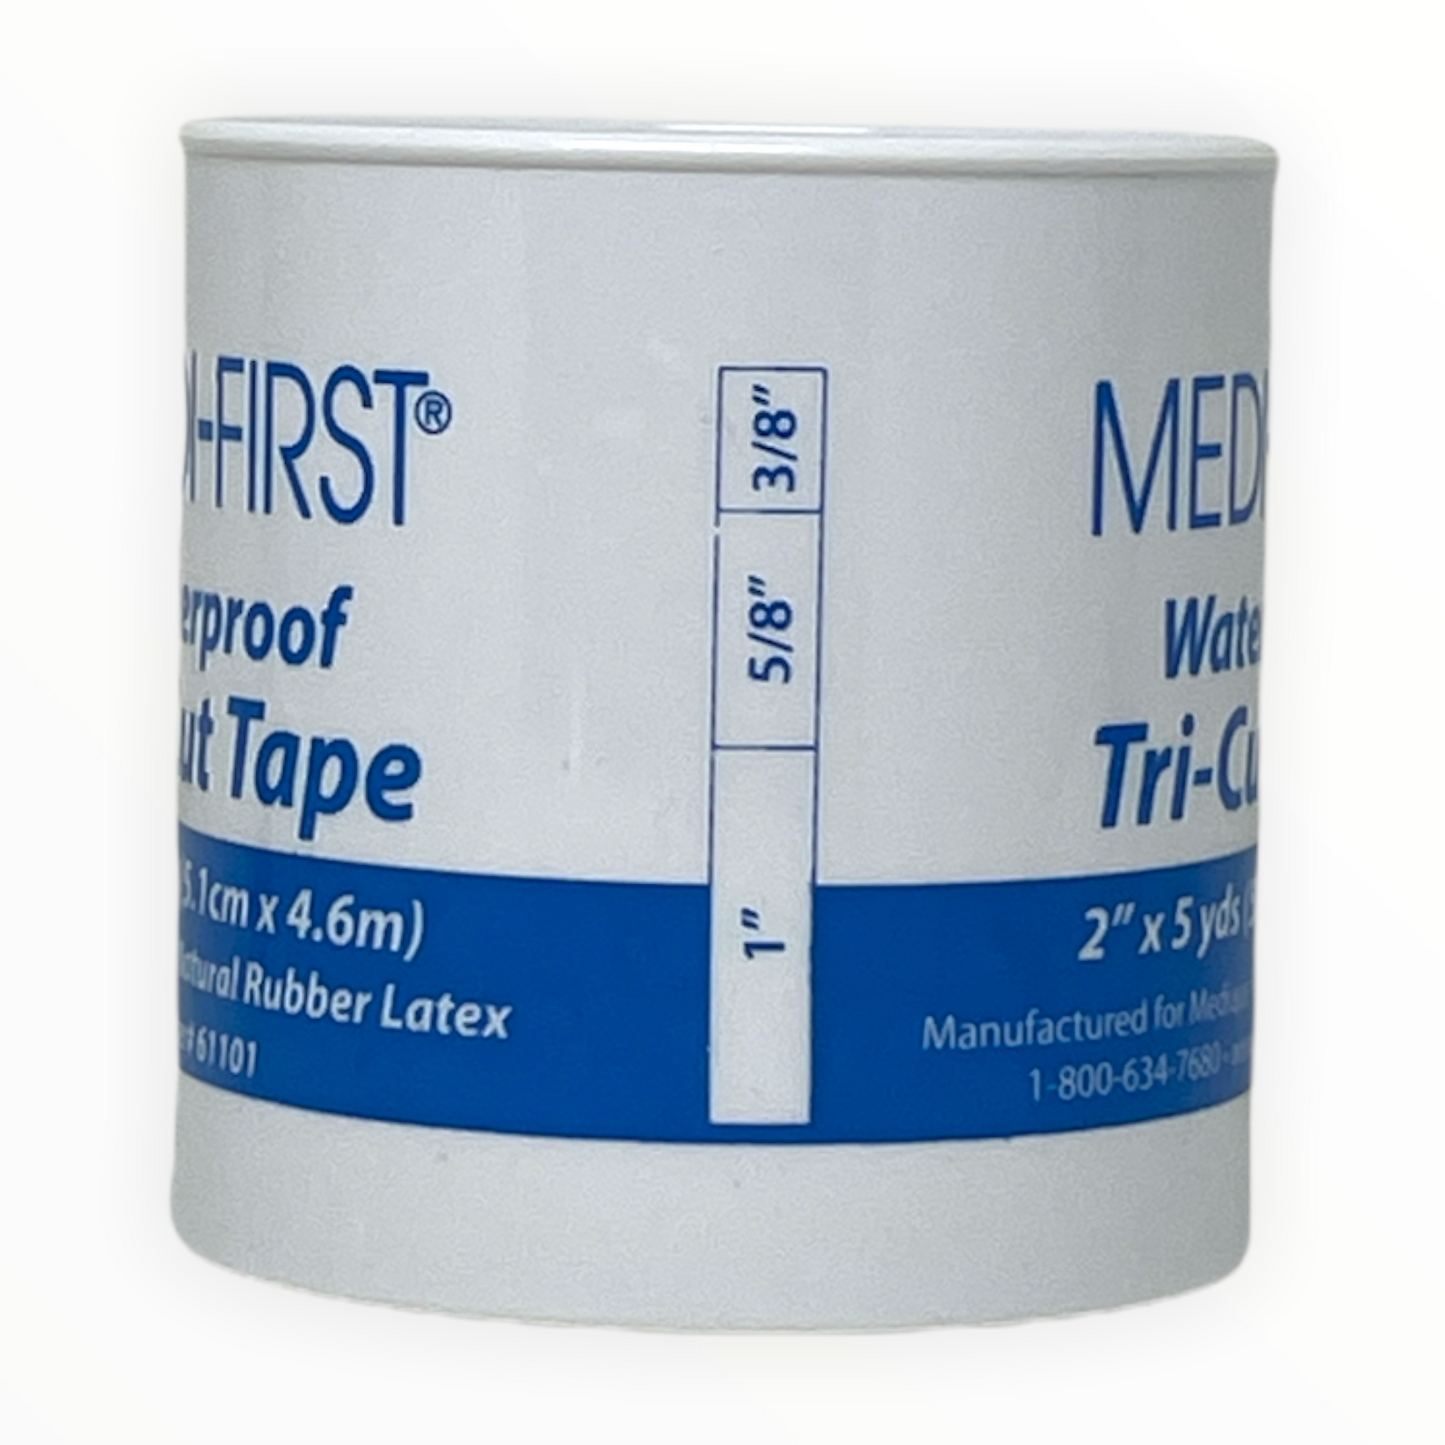 Triple Cut Adhesive Tape 5 Yards